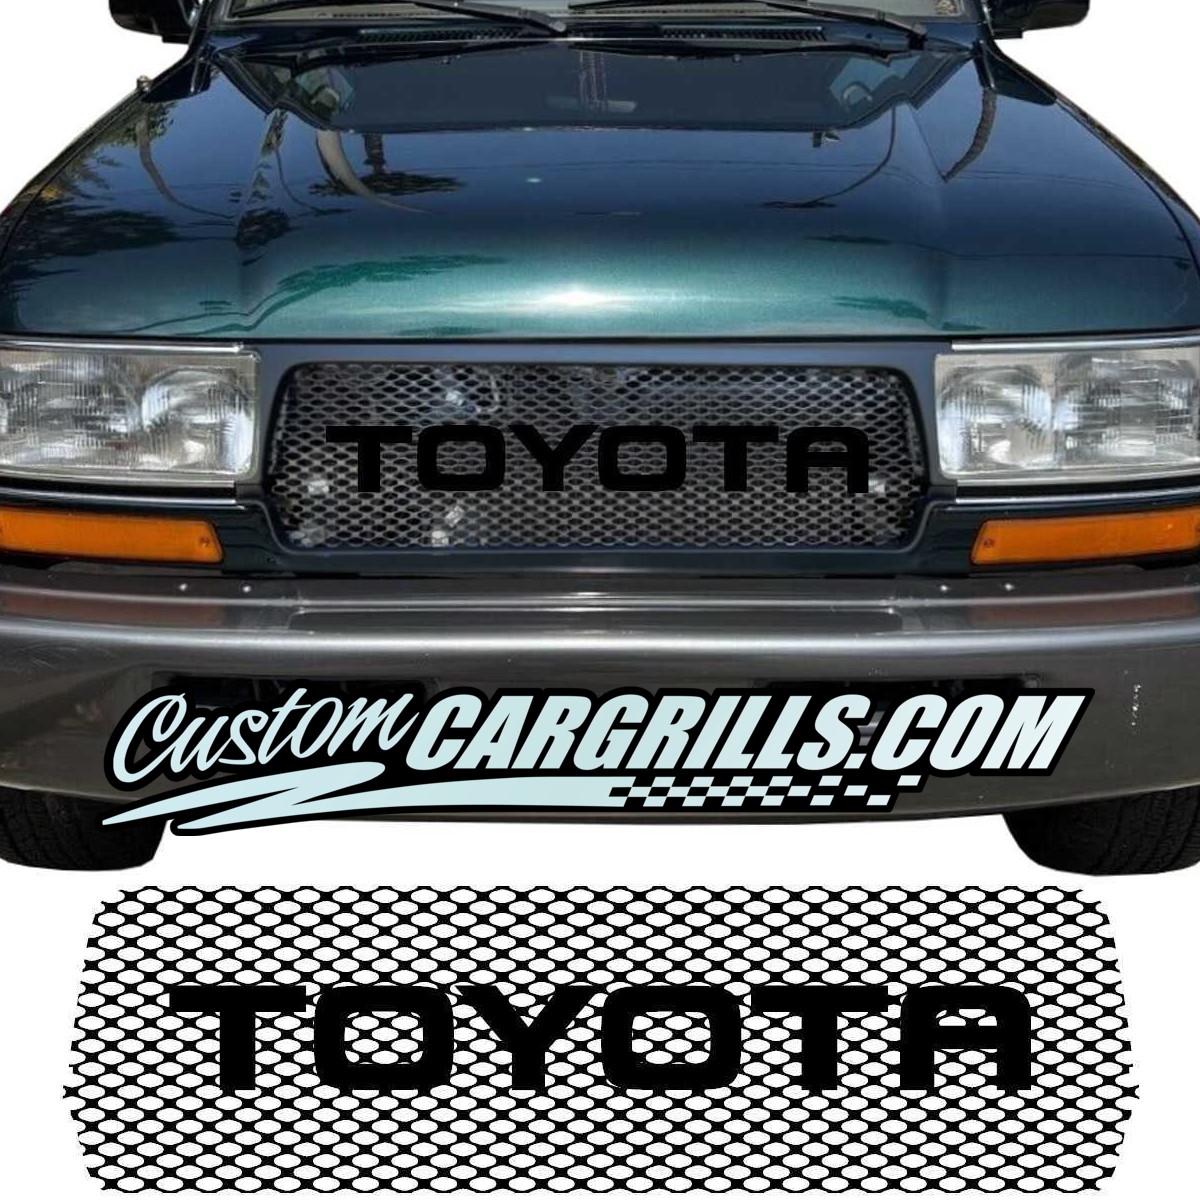 www.customcargrills.com